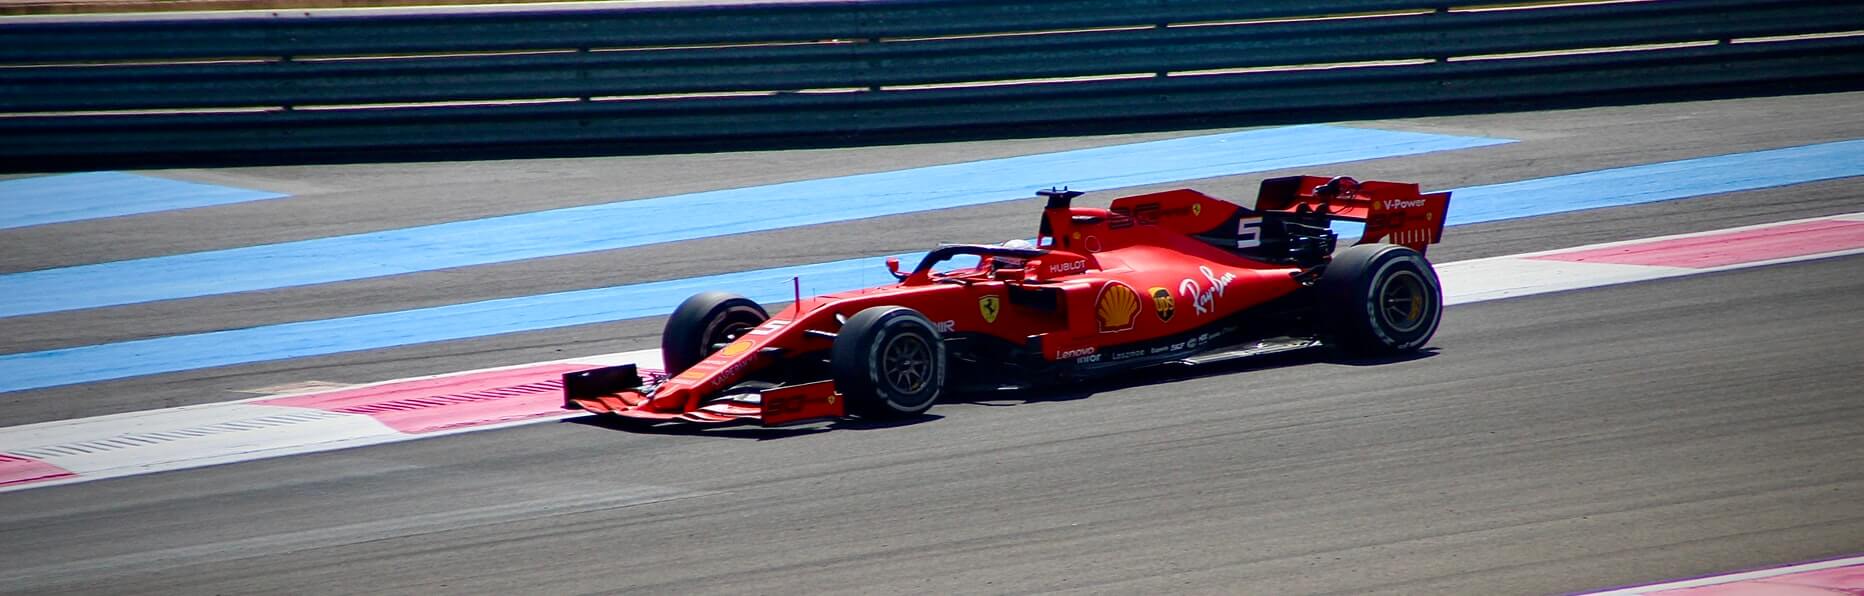 Formule 1 GP Bahrein kijken via internet Gratis